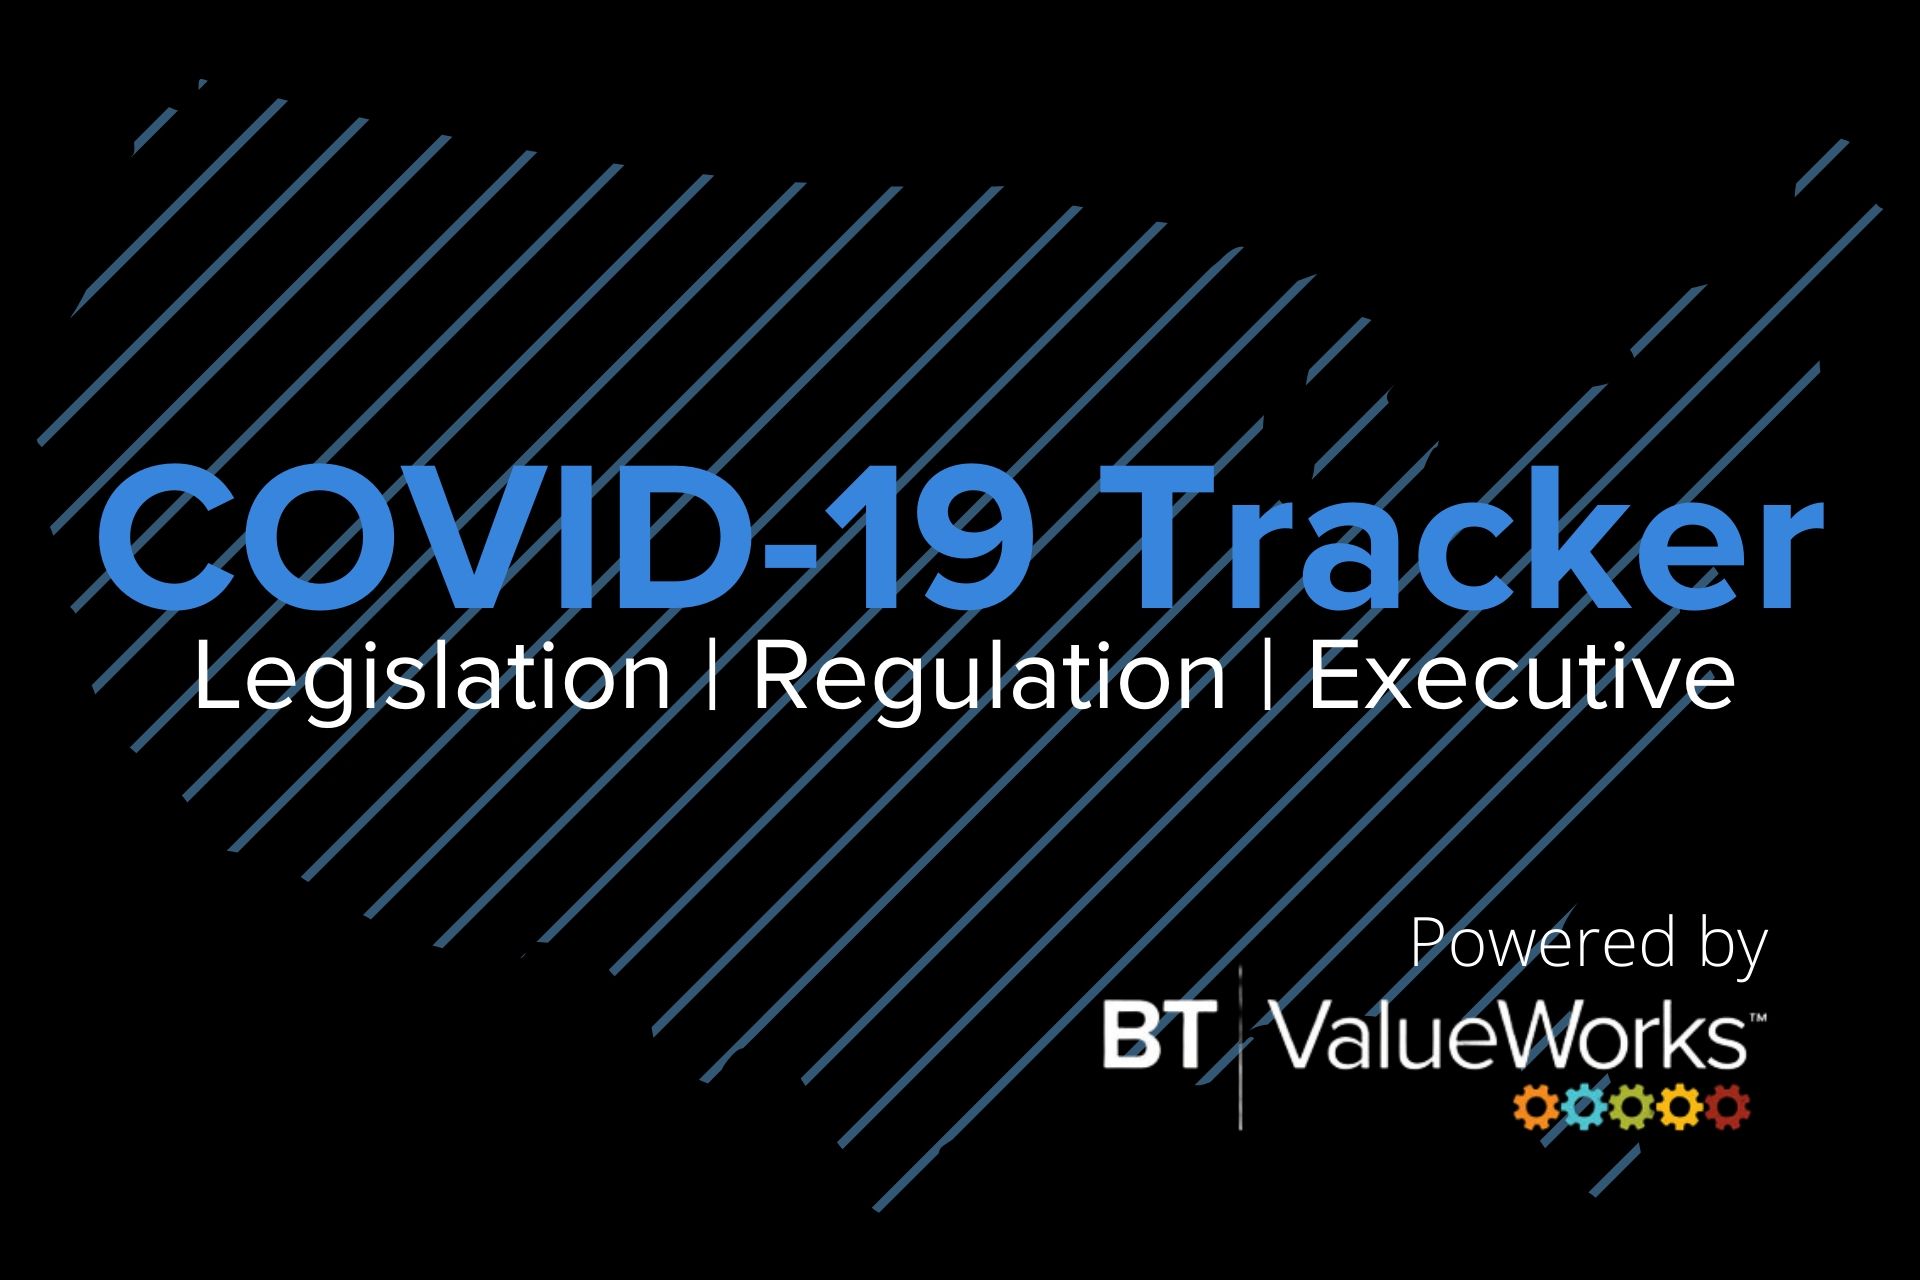 COVID-19 Tracker: Legislation, Regulation, Executive